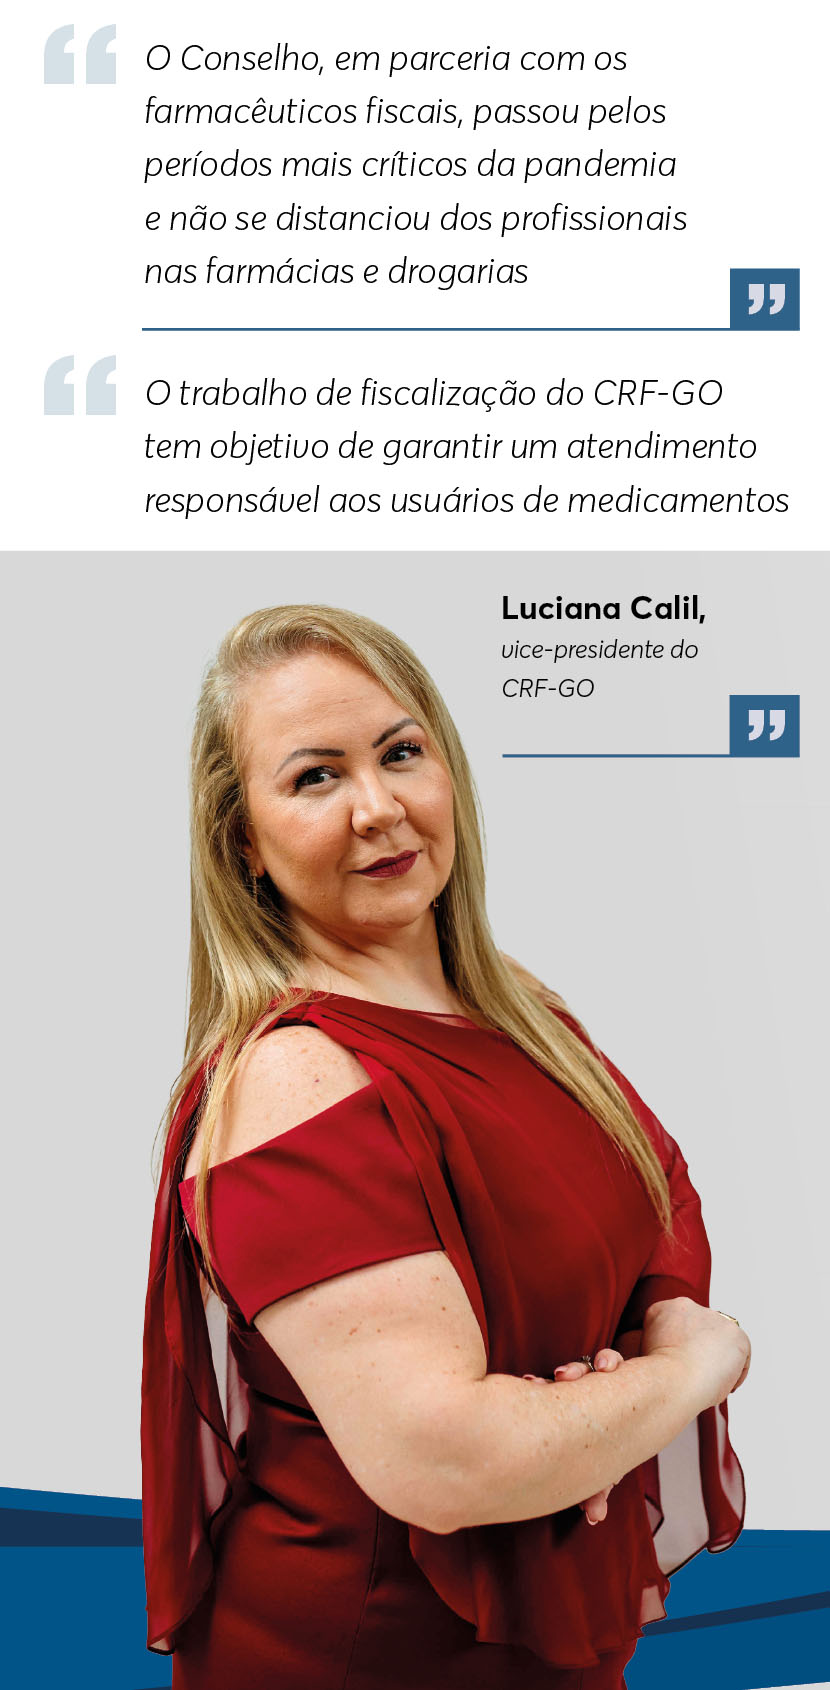 Luciana Calil, vice-presidente do CRF-GO